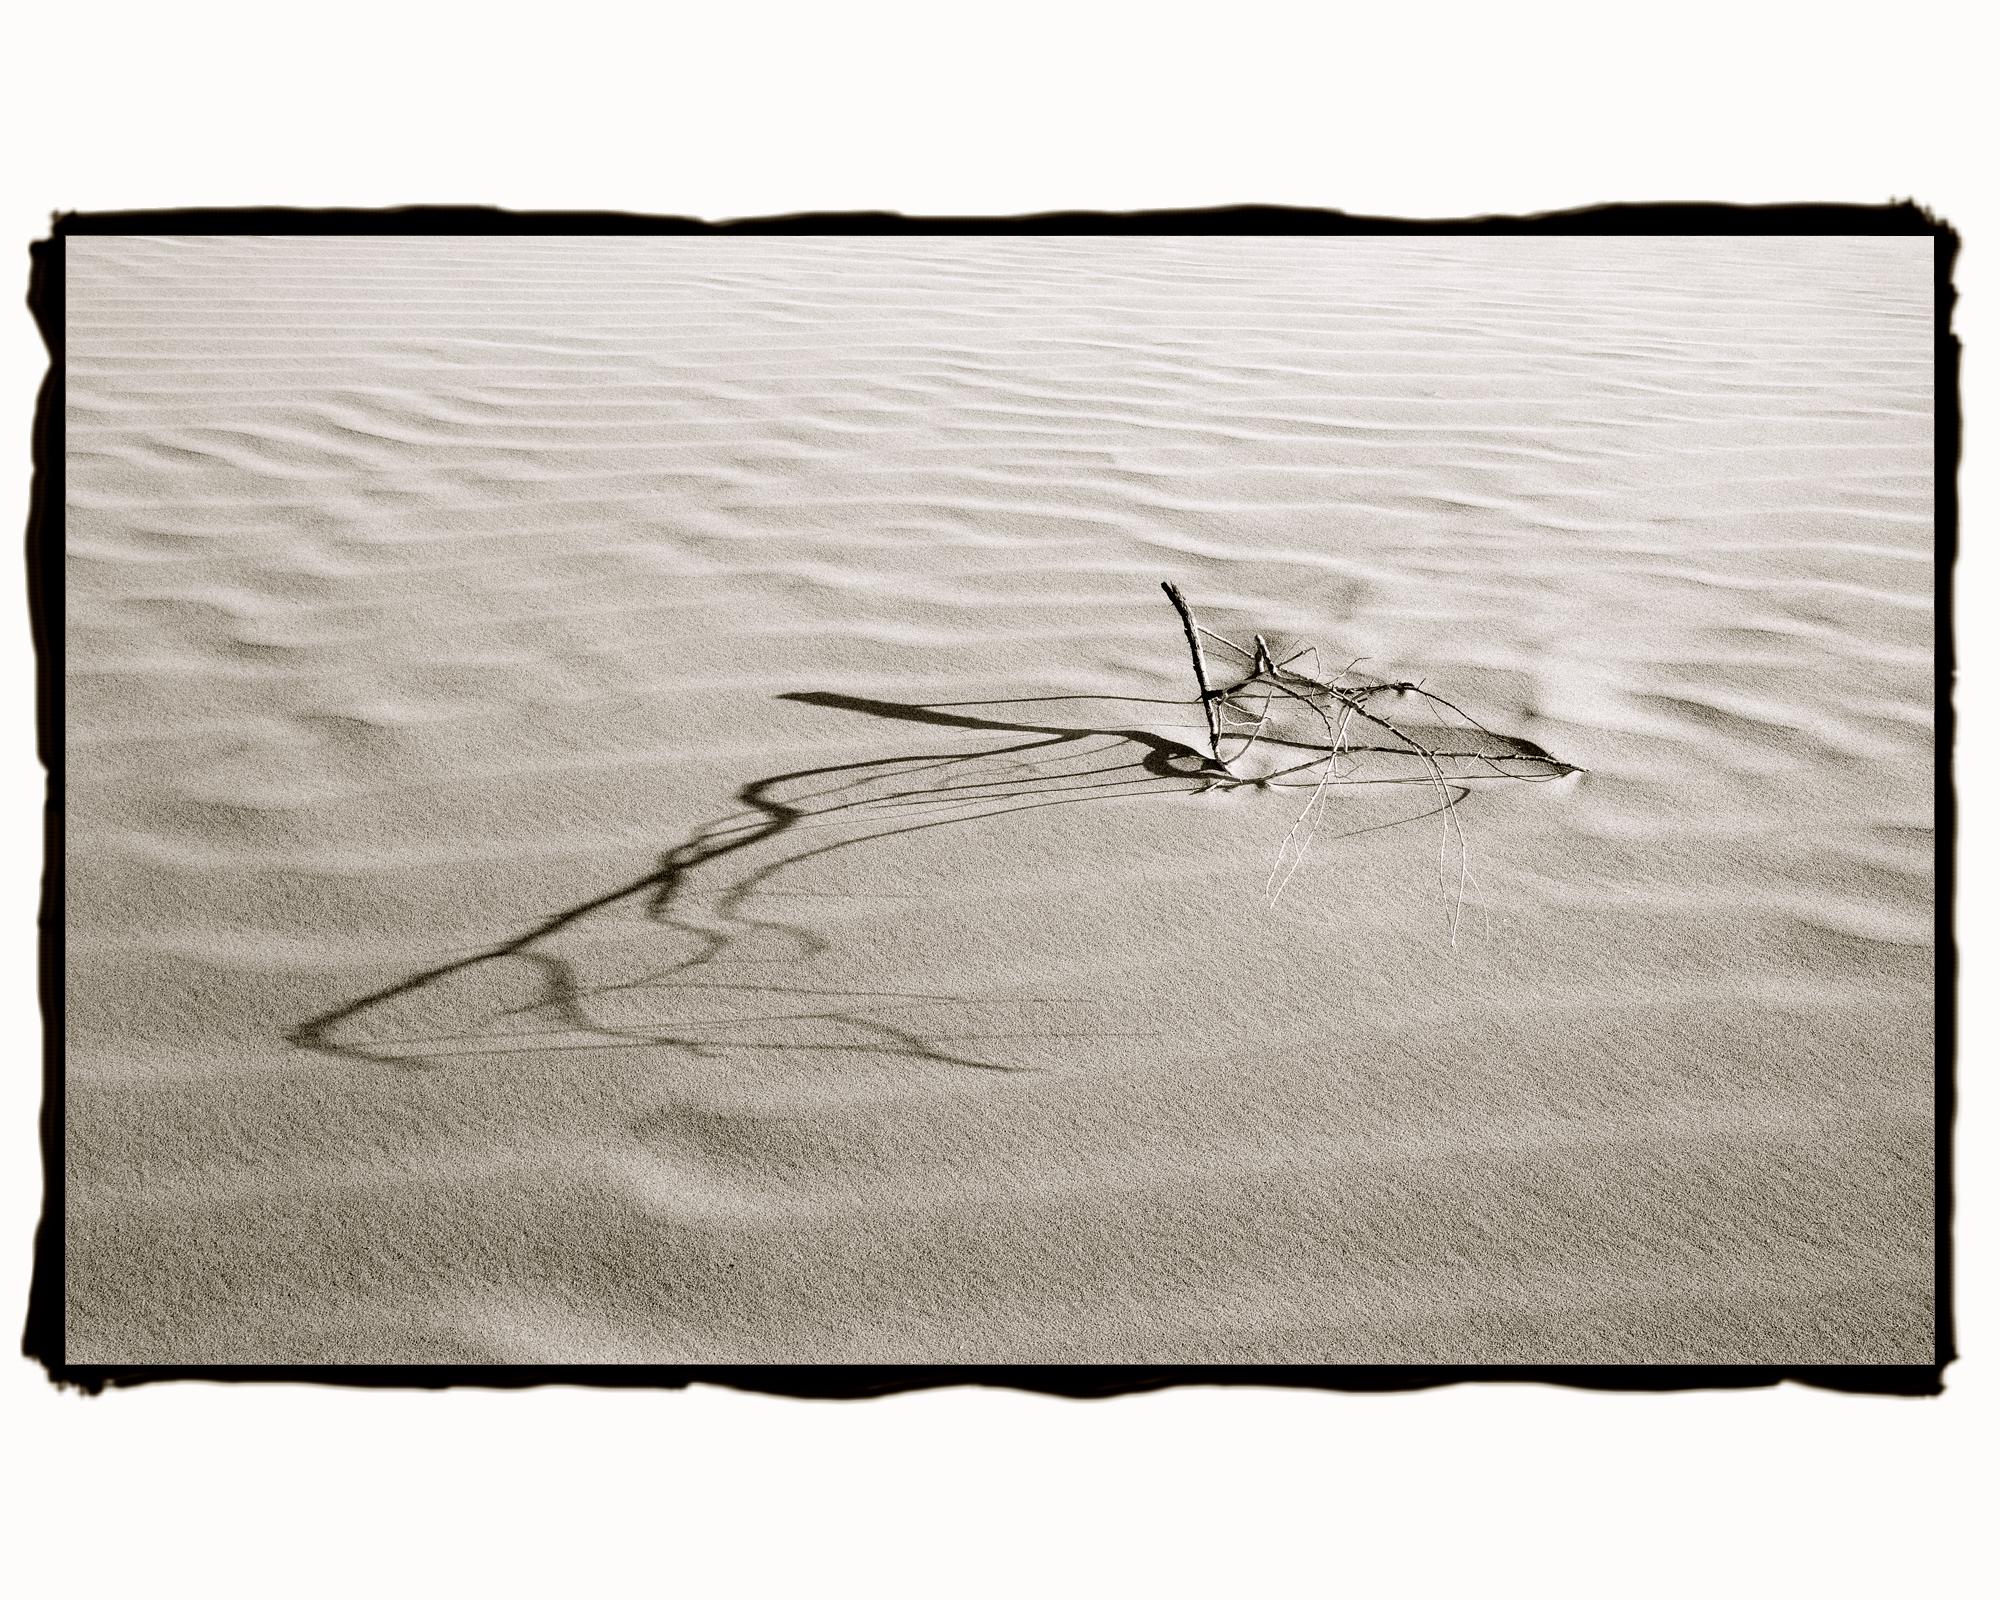 Barbara Ann Leideritz Black and White Photograph - Branches in Dune